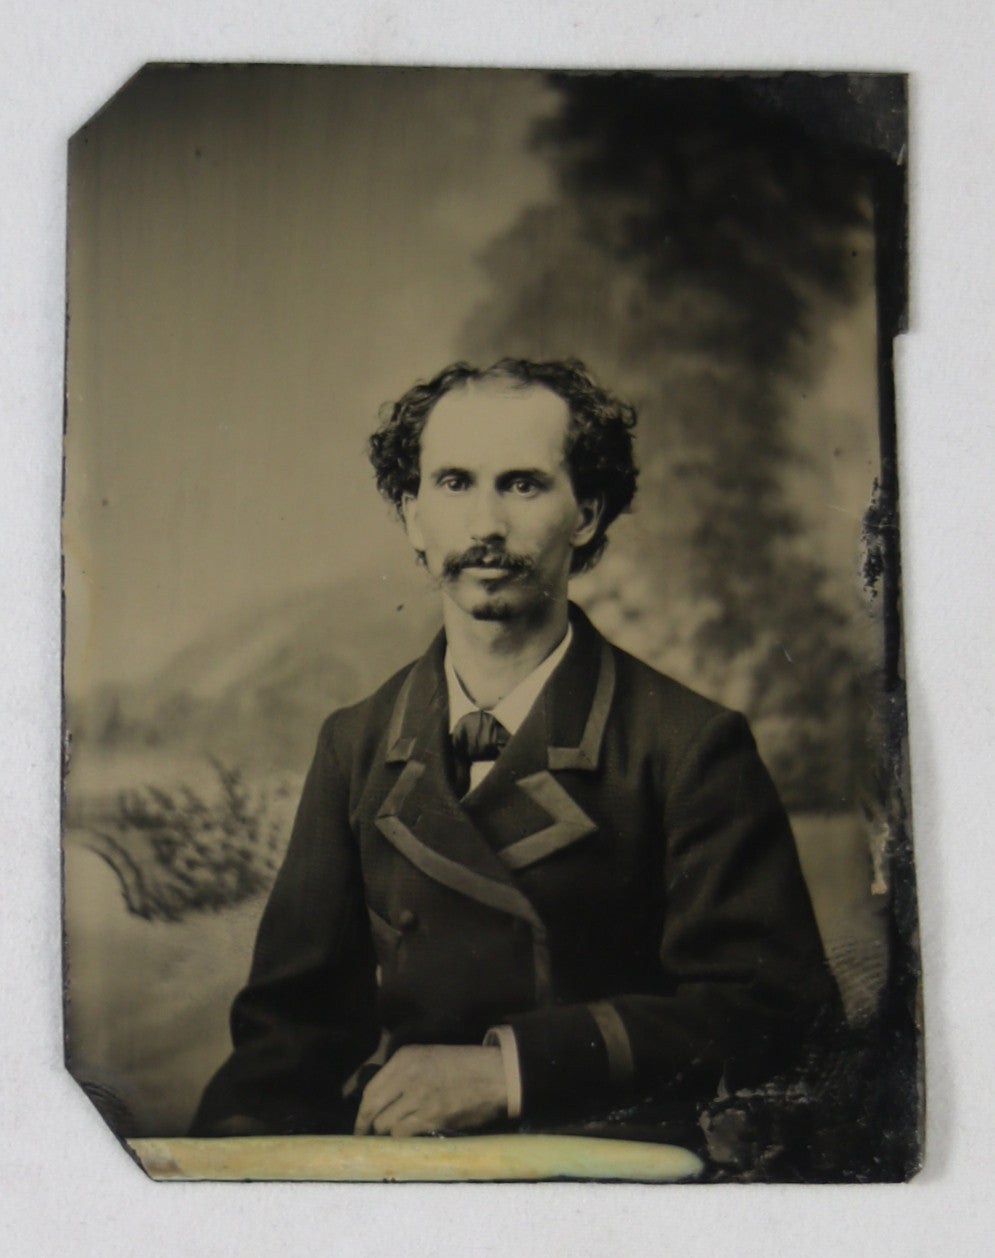 Tintype photo of man sitting, late 1800s